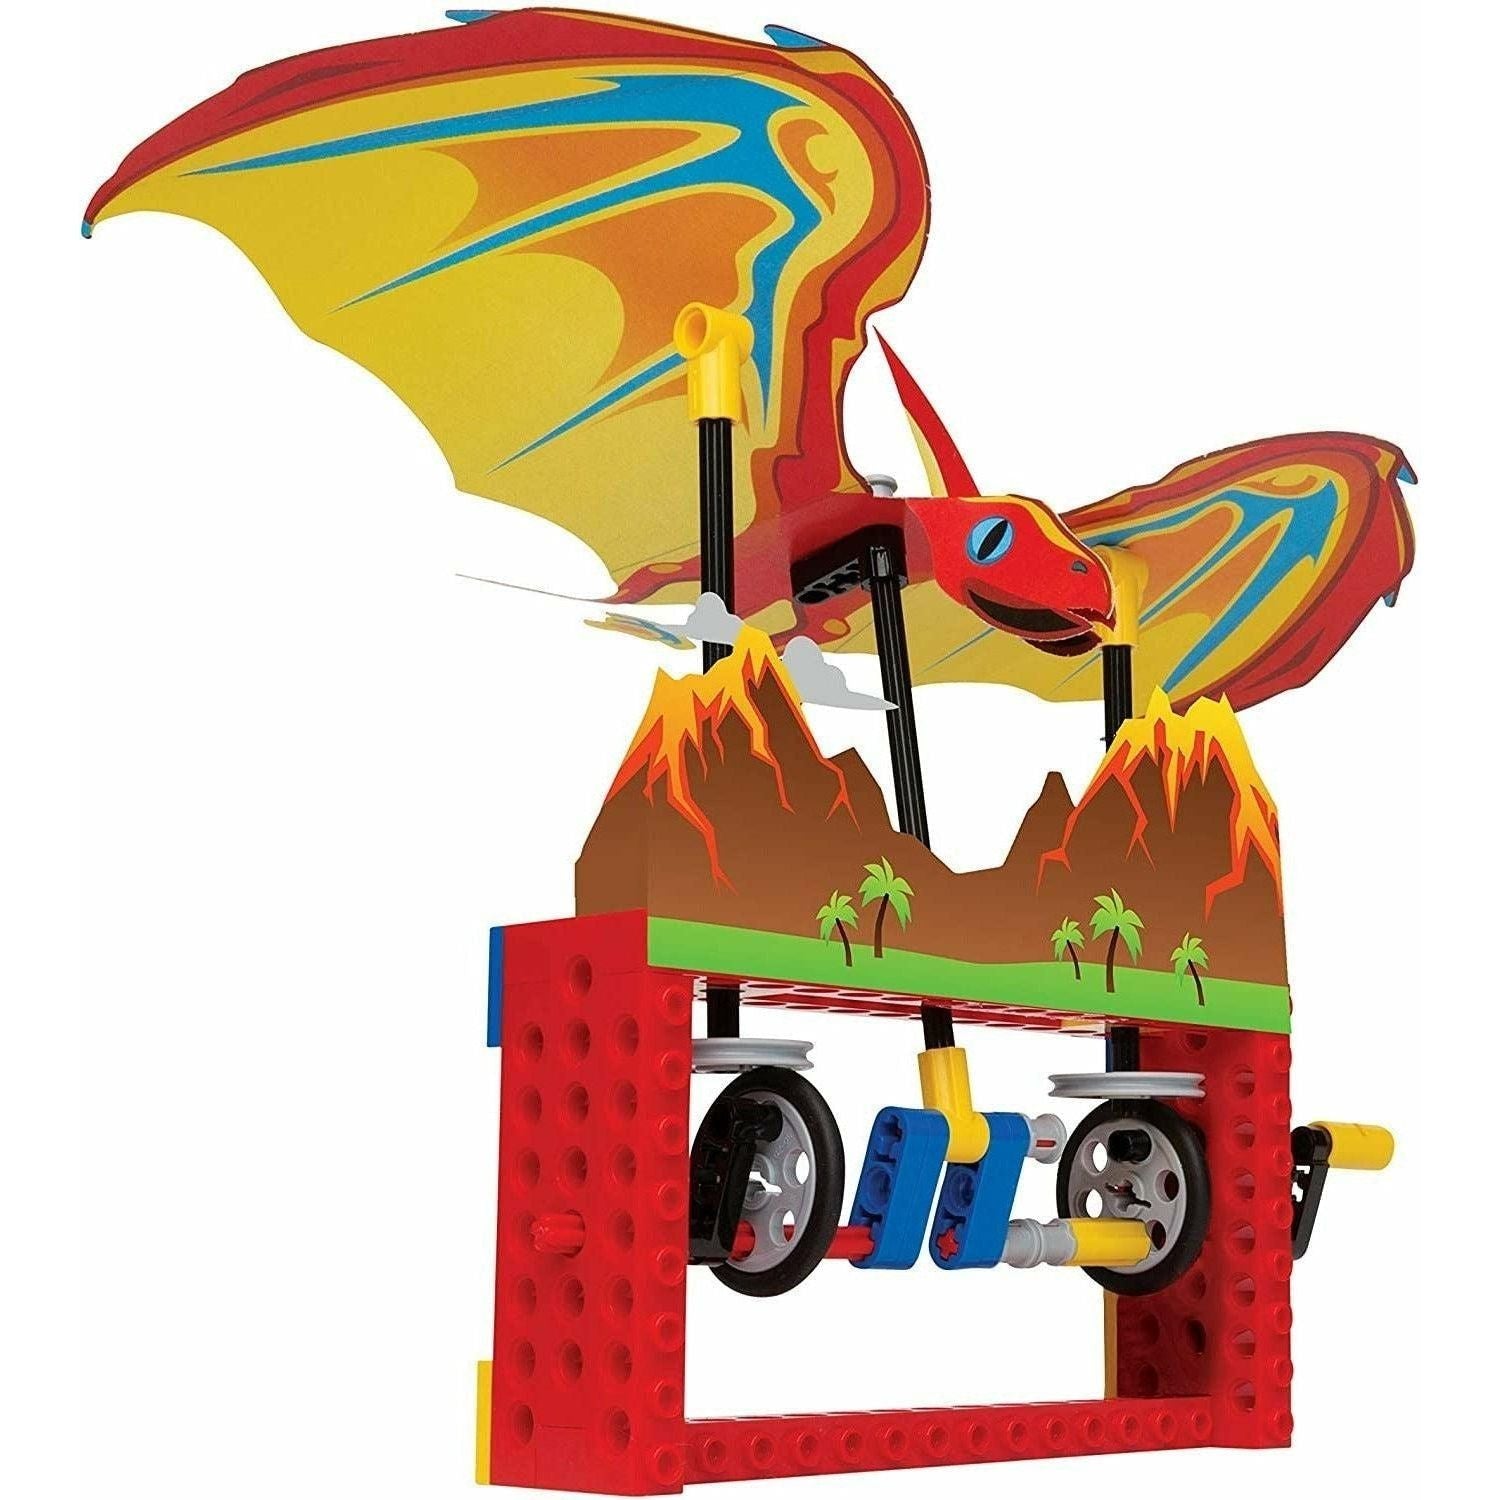 Klutz Lego Gear Bots Science/STEM Activity Kit - BumbleToys - 8-13 Years, Boys, Creator, Gear Bots, Girls, LEGO, OXE, Pre-Order